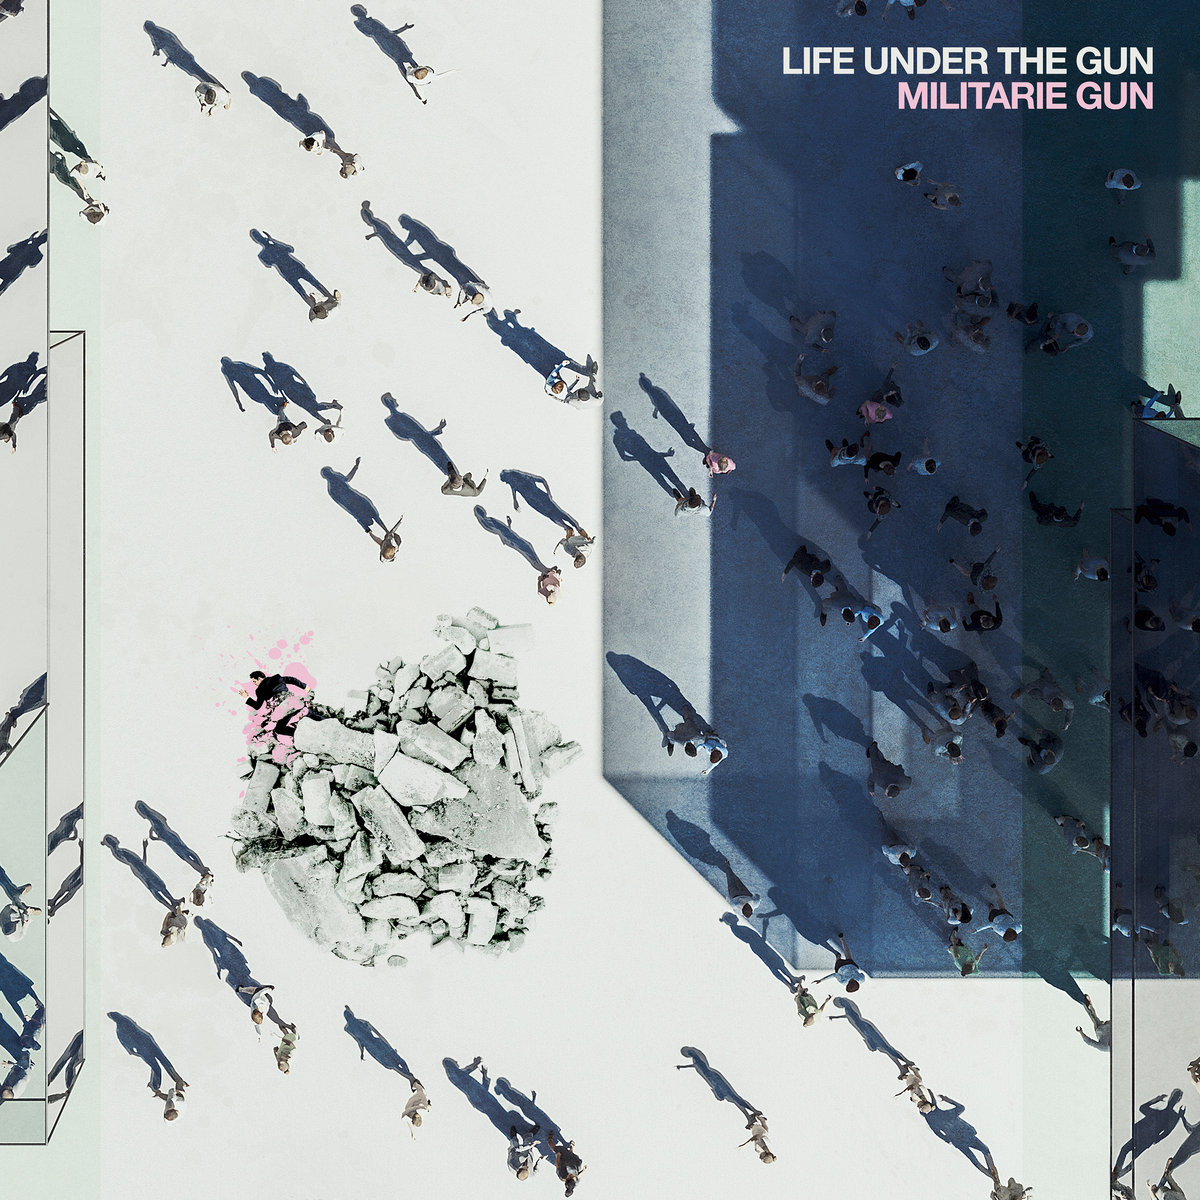 Militarie Gun Life Under The Gun cover artwork